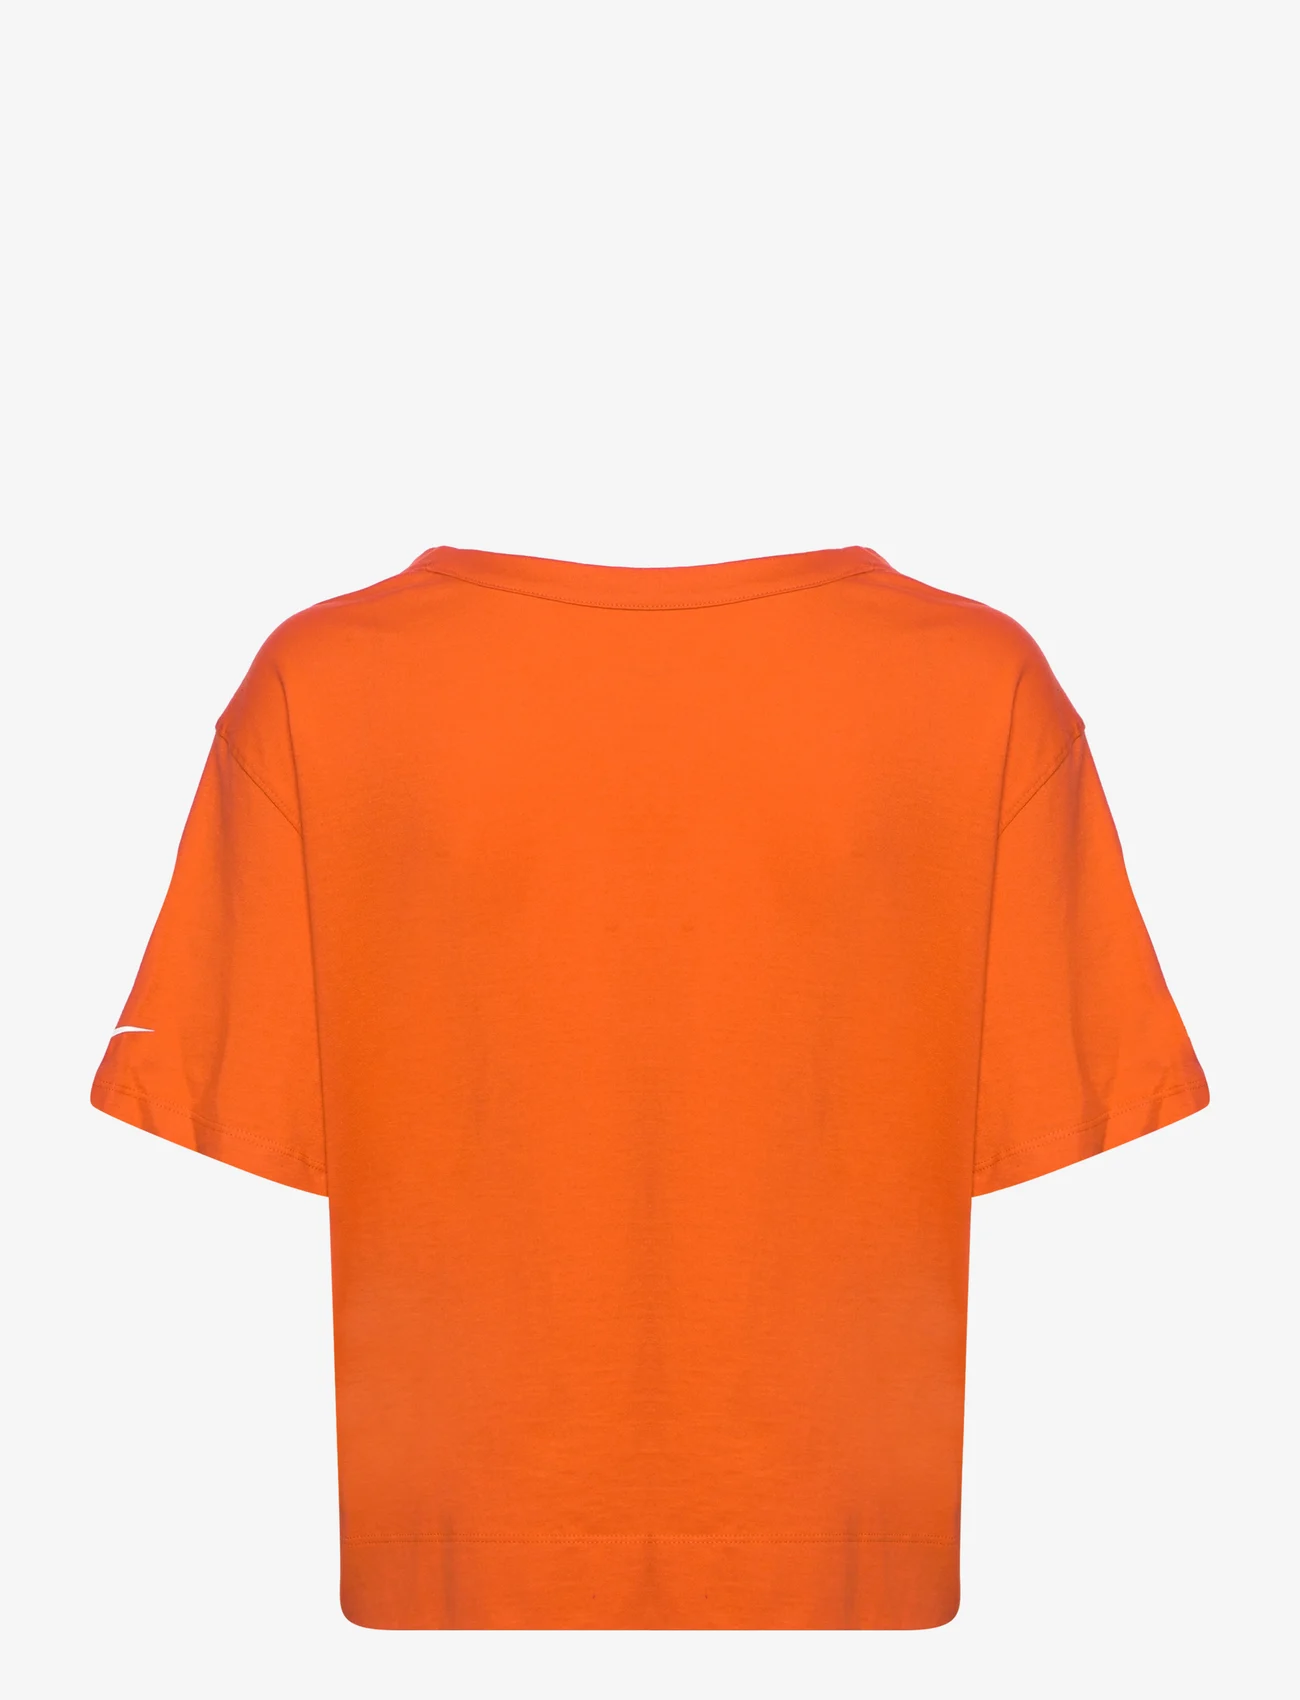 NIKE Fan Gear - Nike NFL Cincinnati Bengals Top - t-shirts - university orange/black - 1